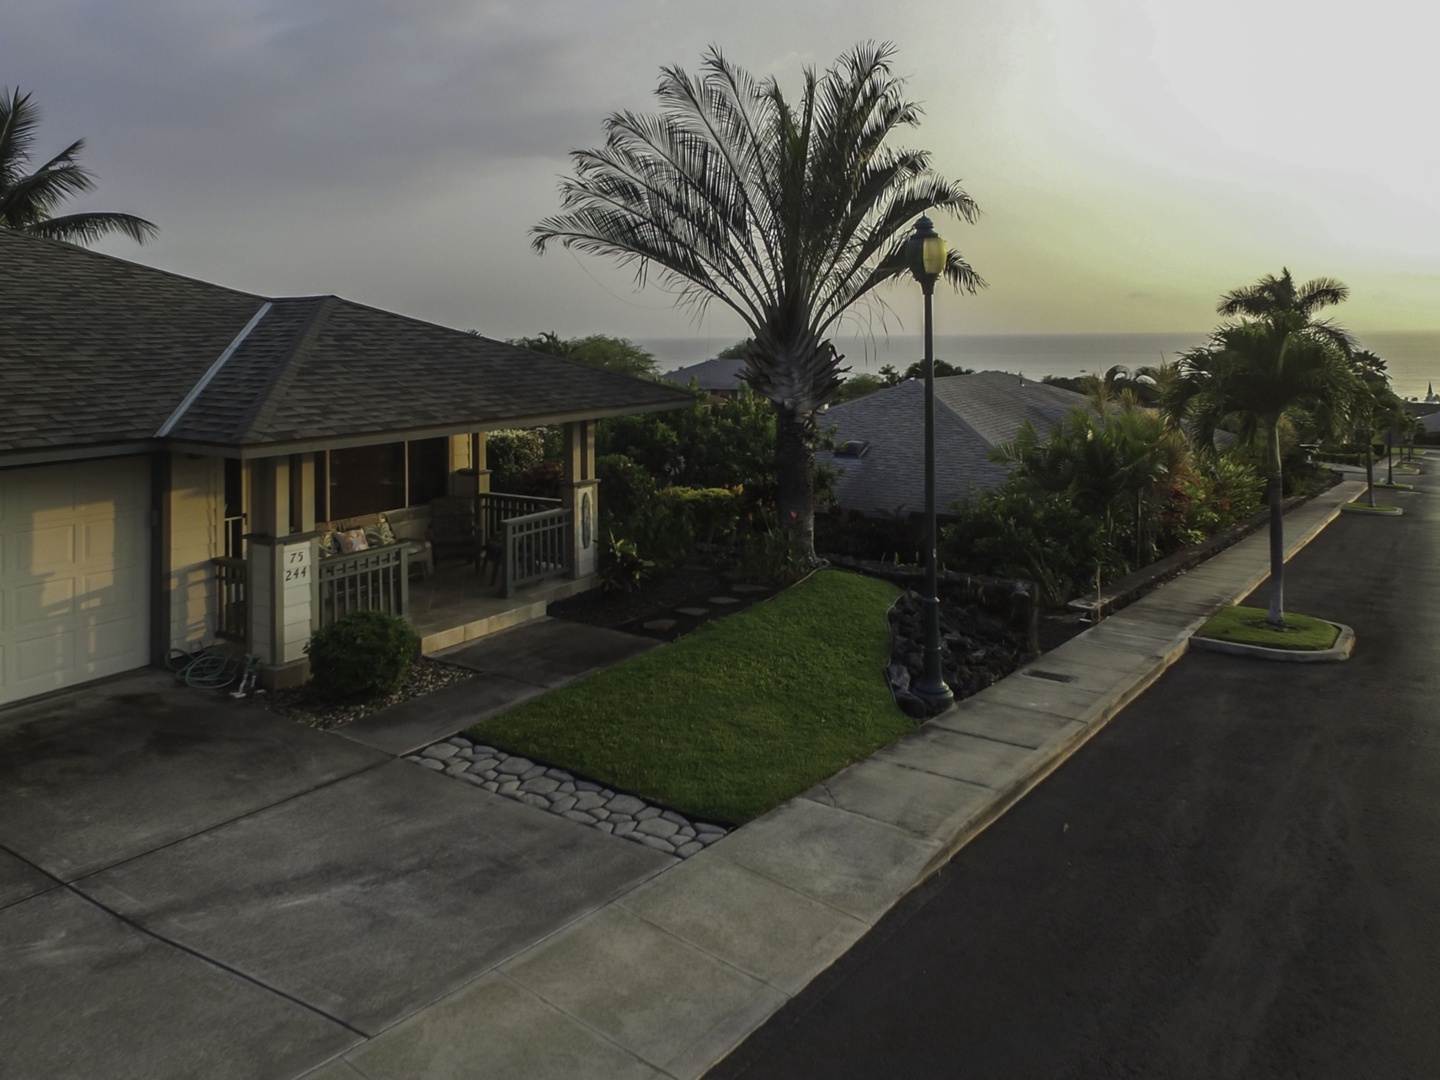 Kailua Kona Vacation Rentals, Hale Alaula - Ocean View - Elevated view of the home